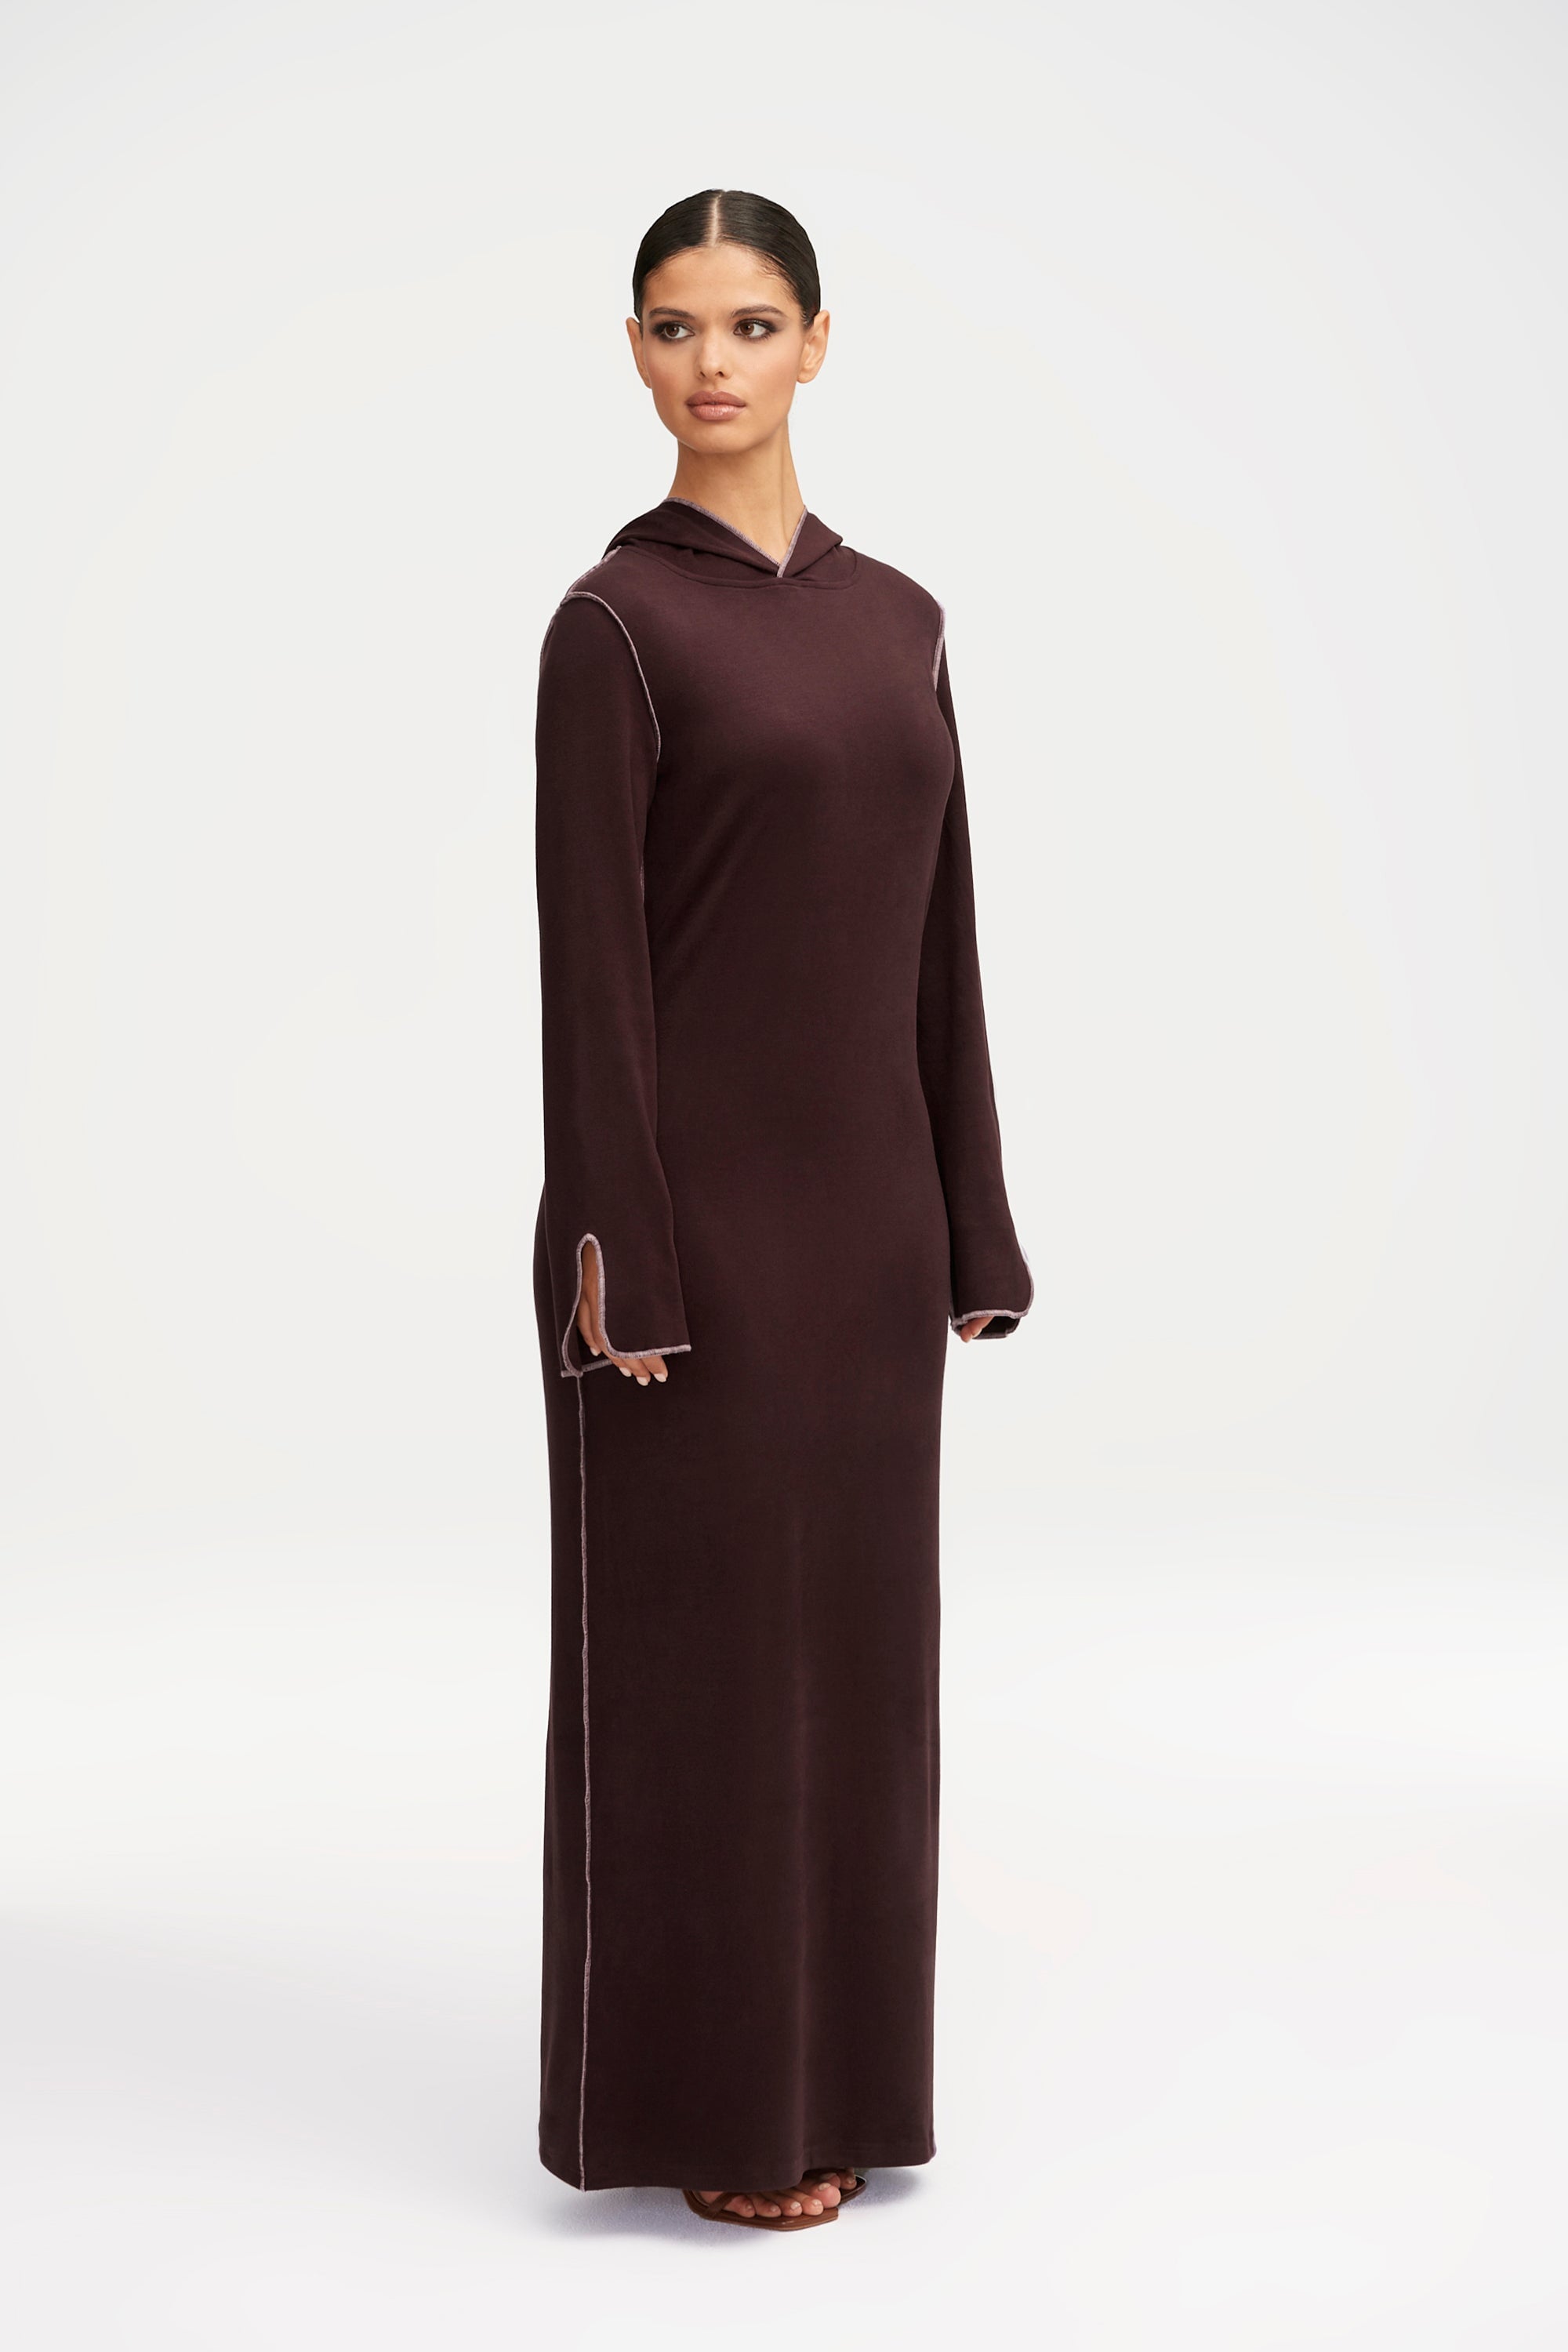 Ava Sweater Hoodie Maxi Dress - Chocolate Clothing Veiled 